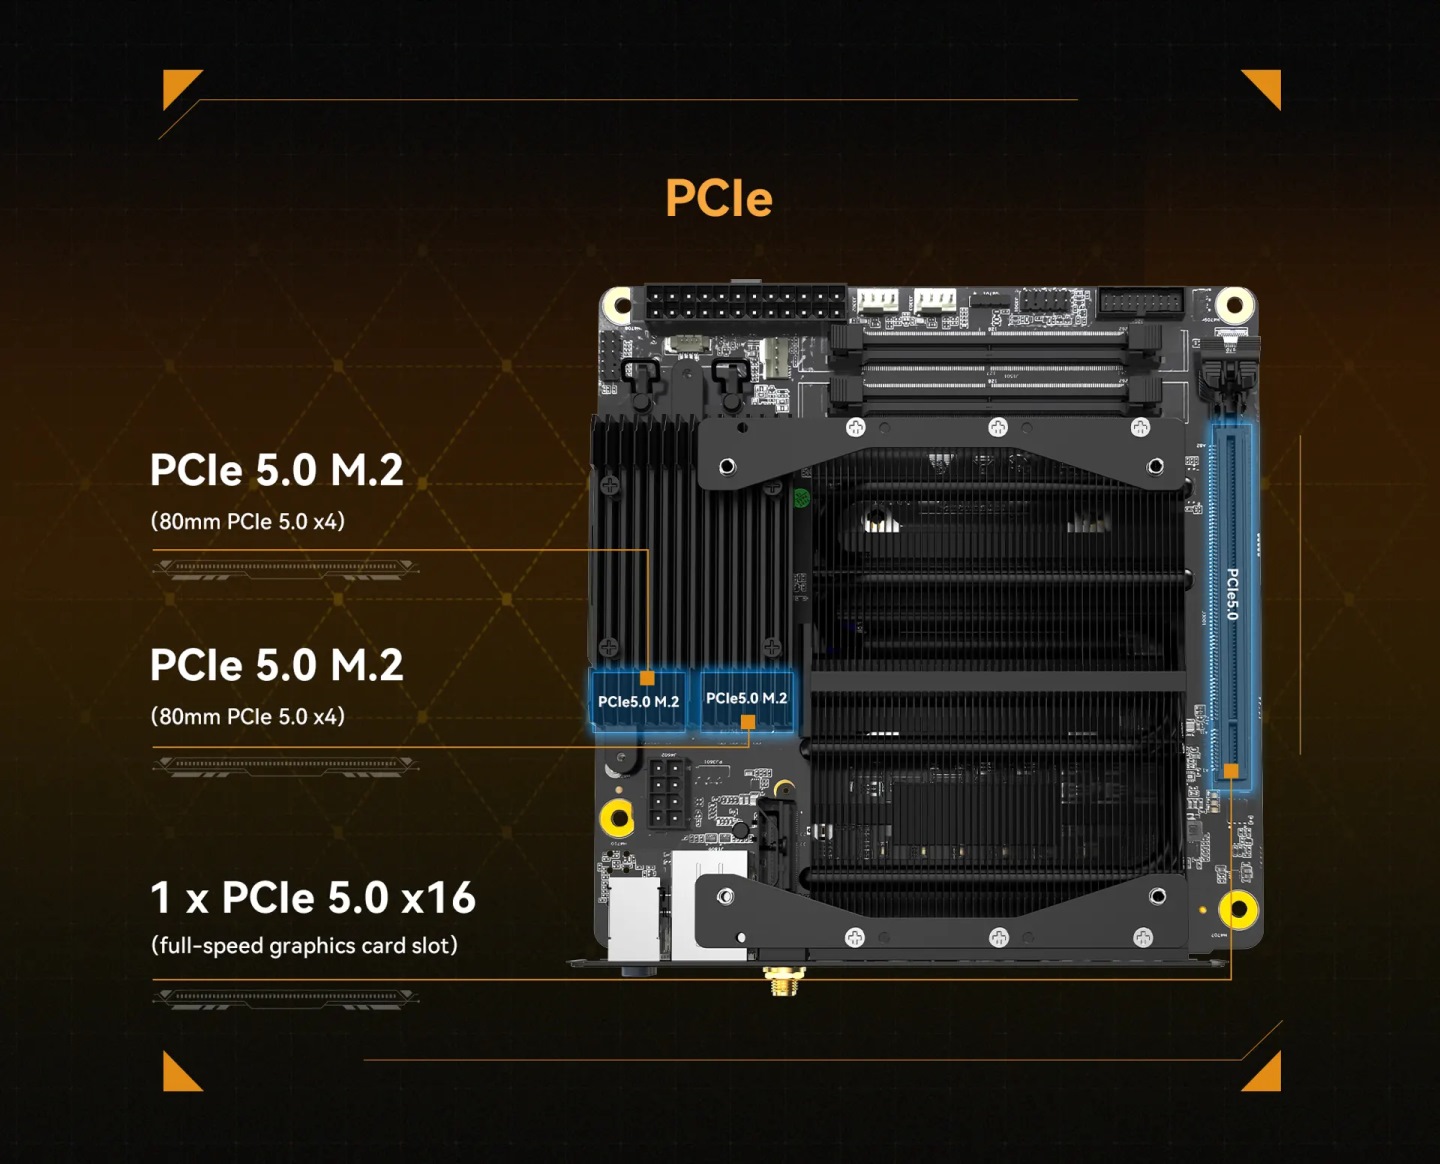 BD770i提供1組PCIe Gen5x16與2組PCIe Gen5x4 M.2 2280插槽。